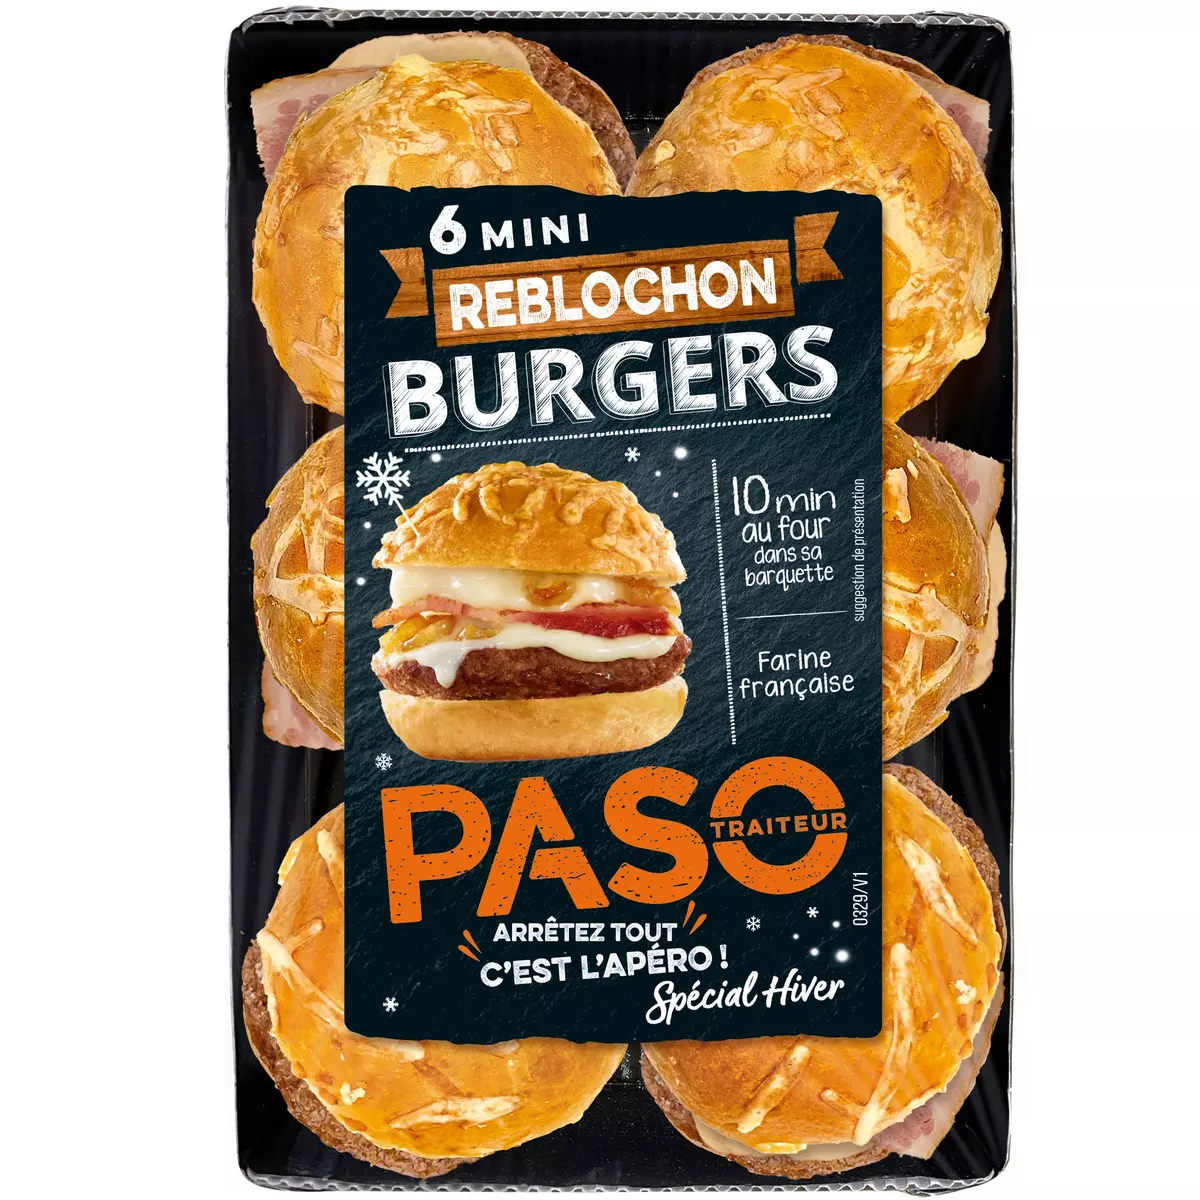 PASO Mini burgers reblochon 6 pièces 240g